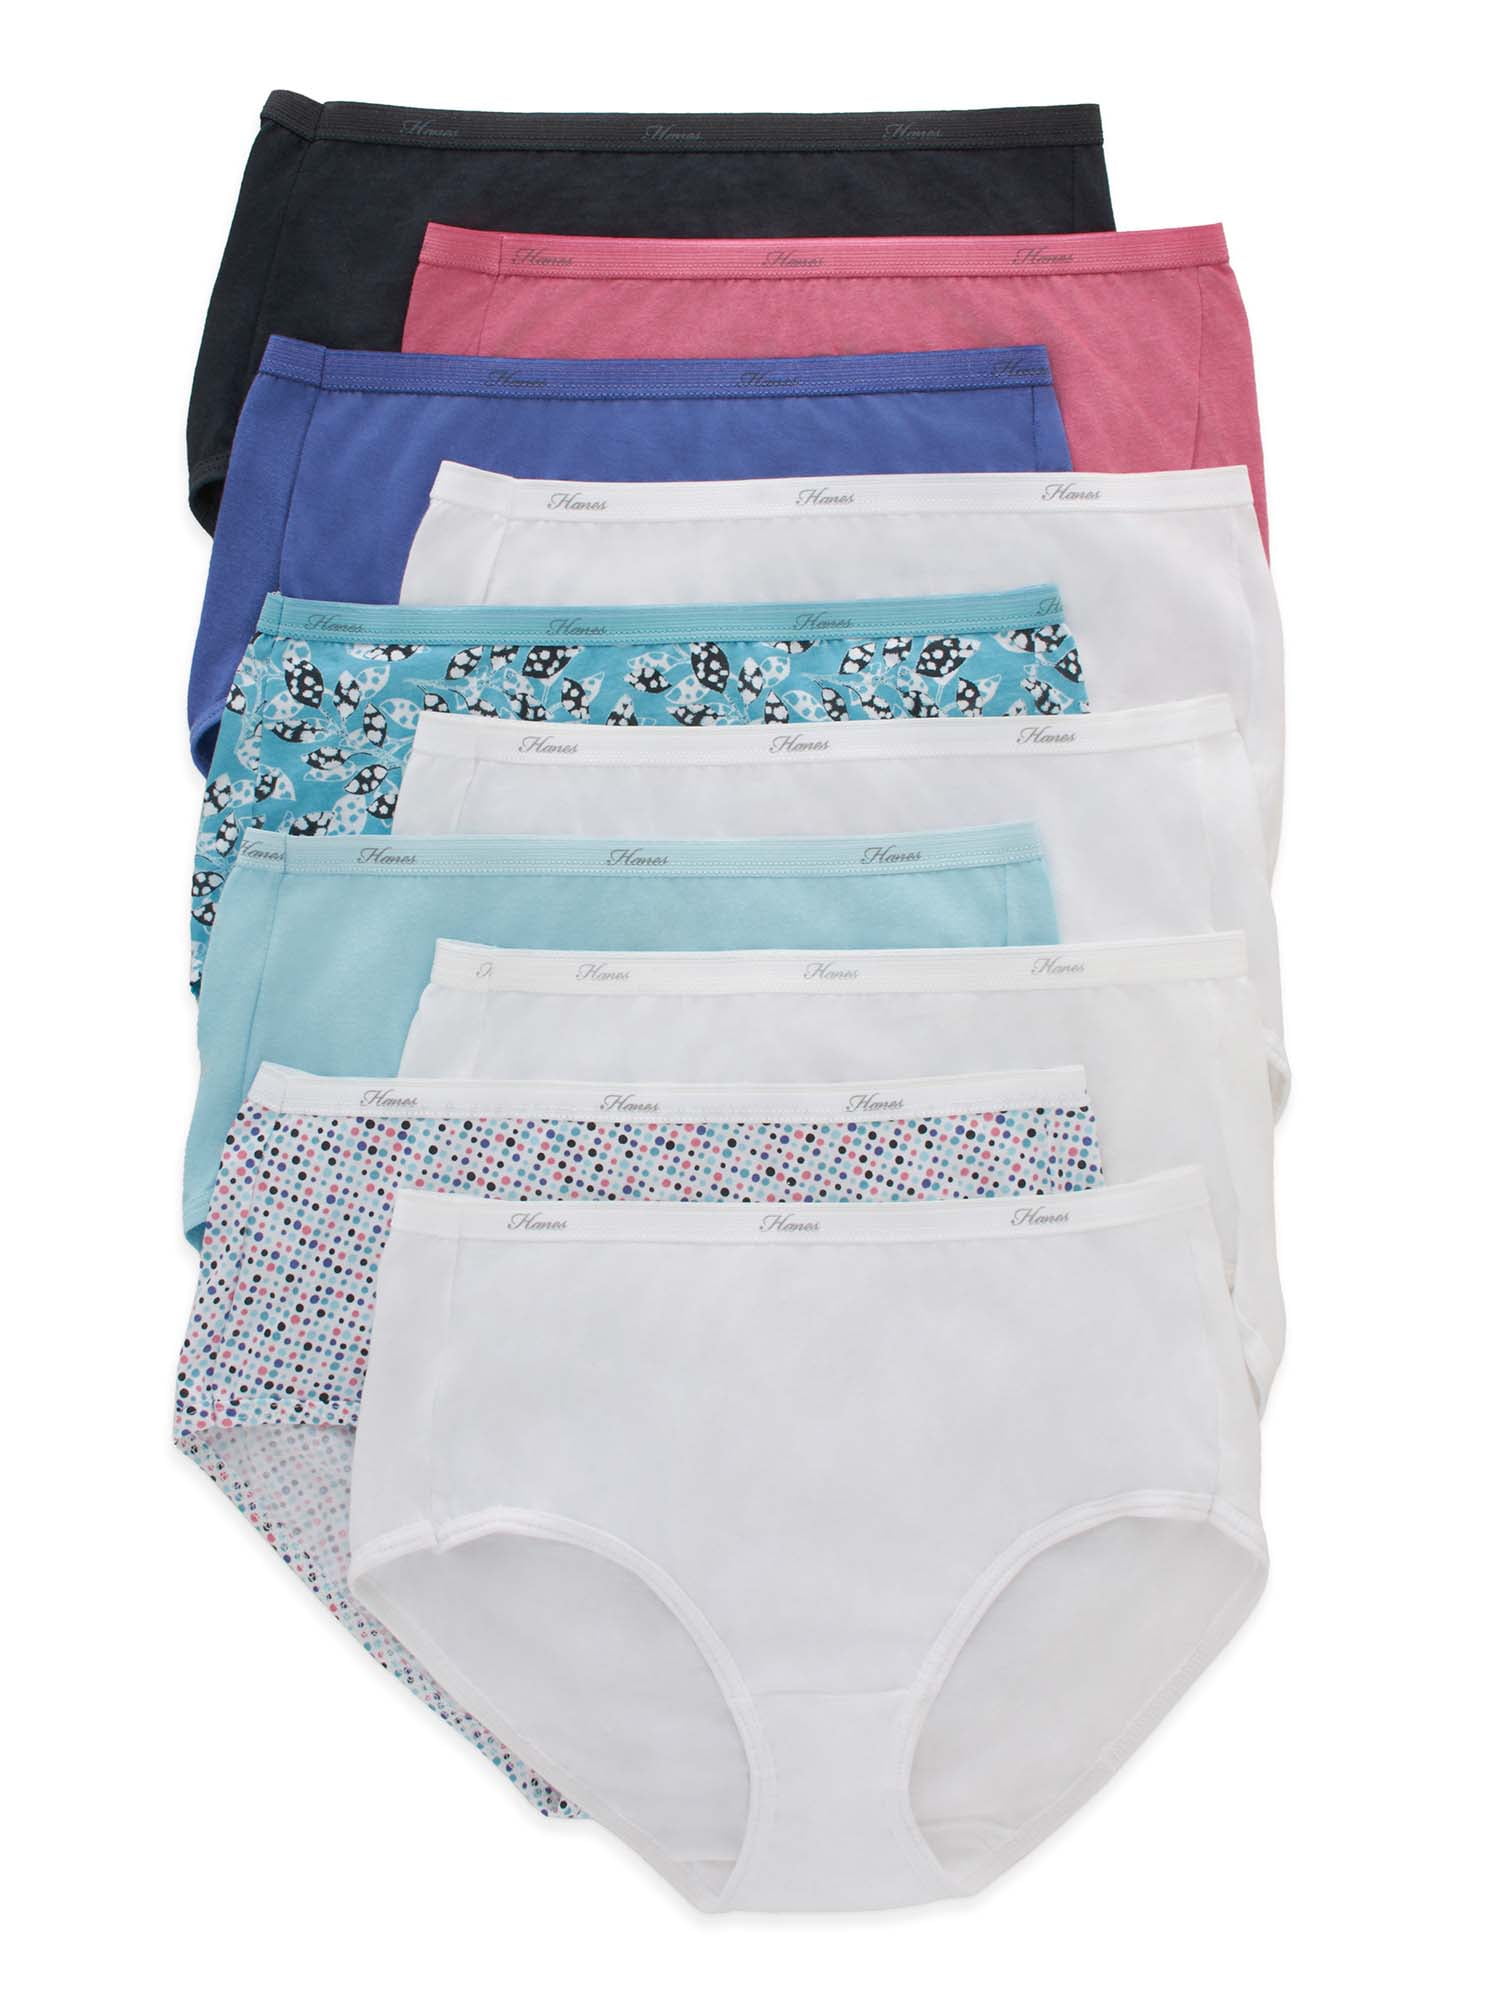 Hanes Women's Cotton Brief 10-Pack - Walmart.com